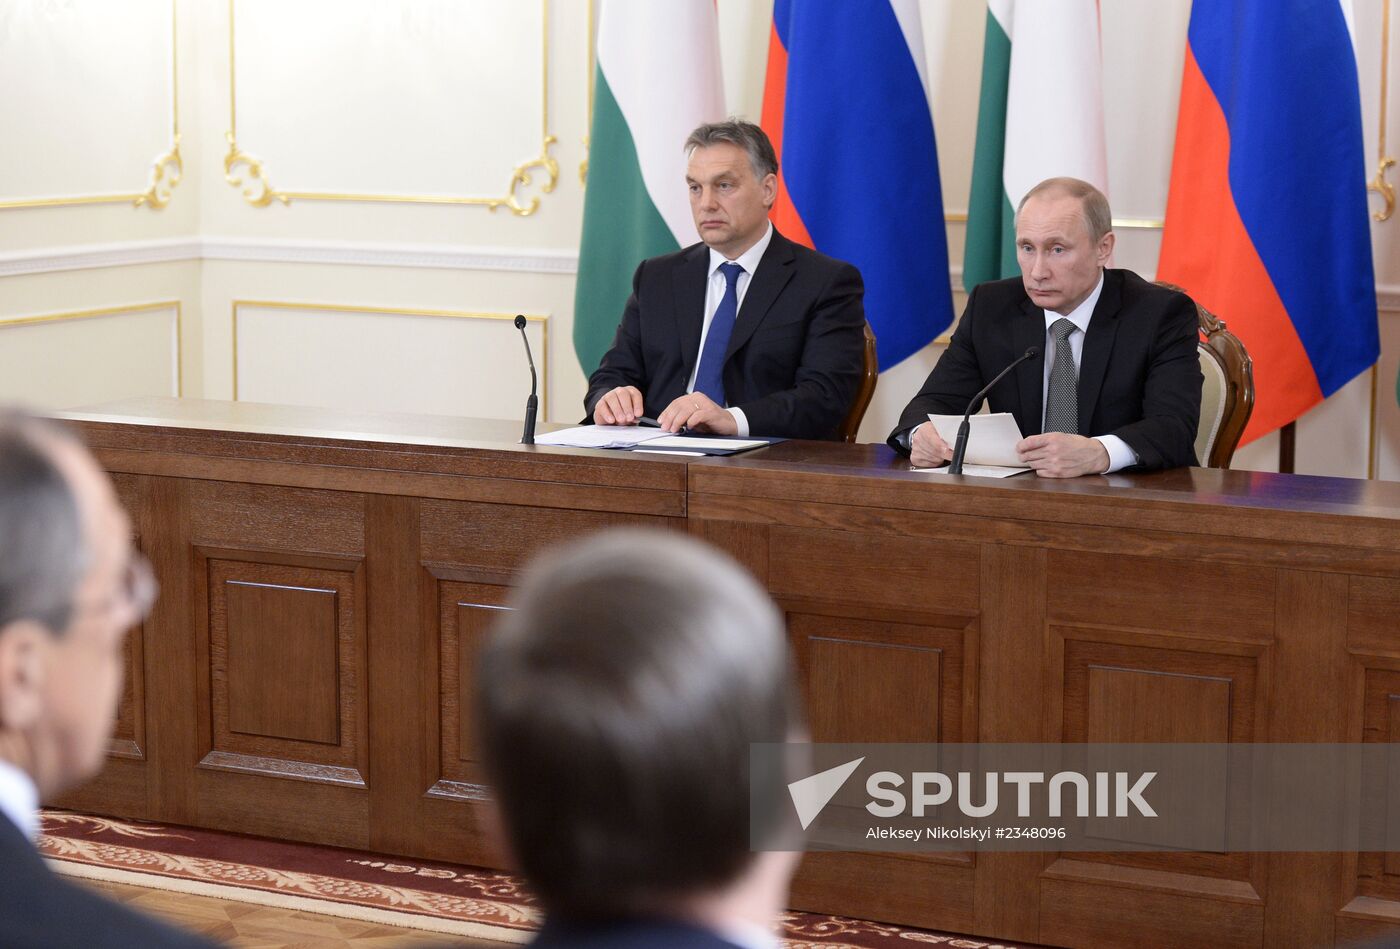 Vladimir Putin meets with Viktor Orban